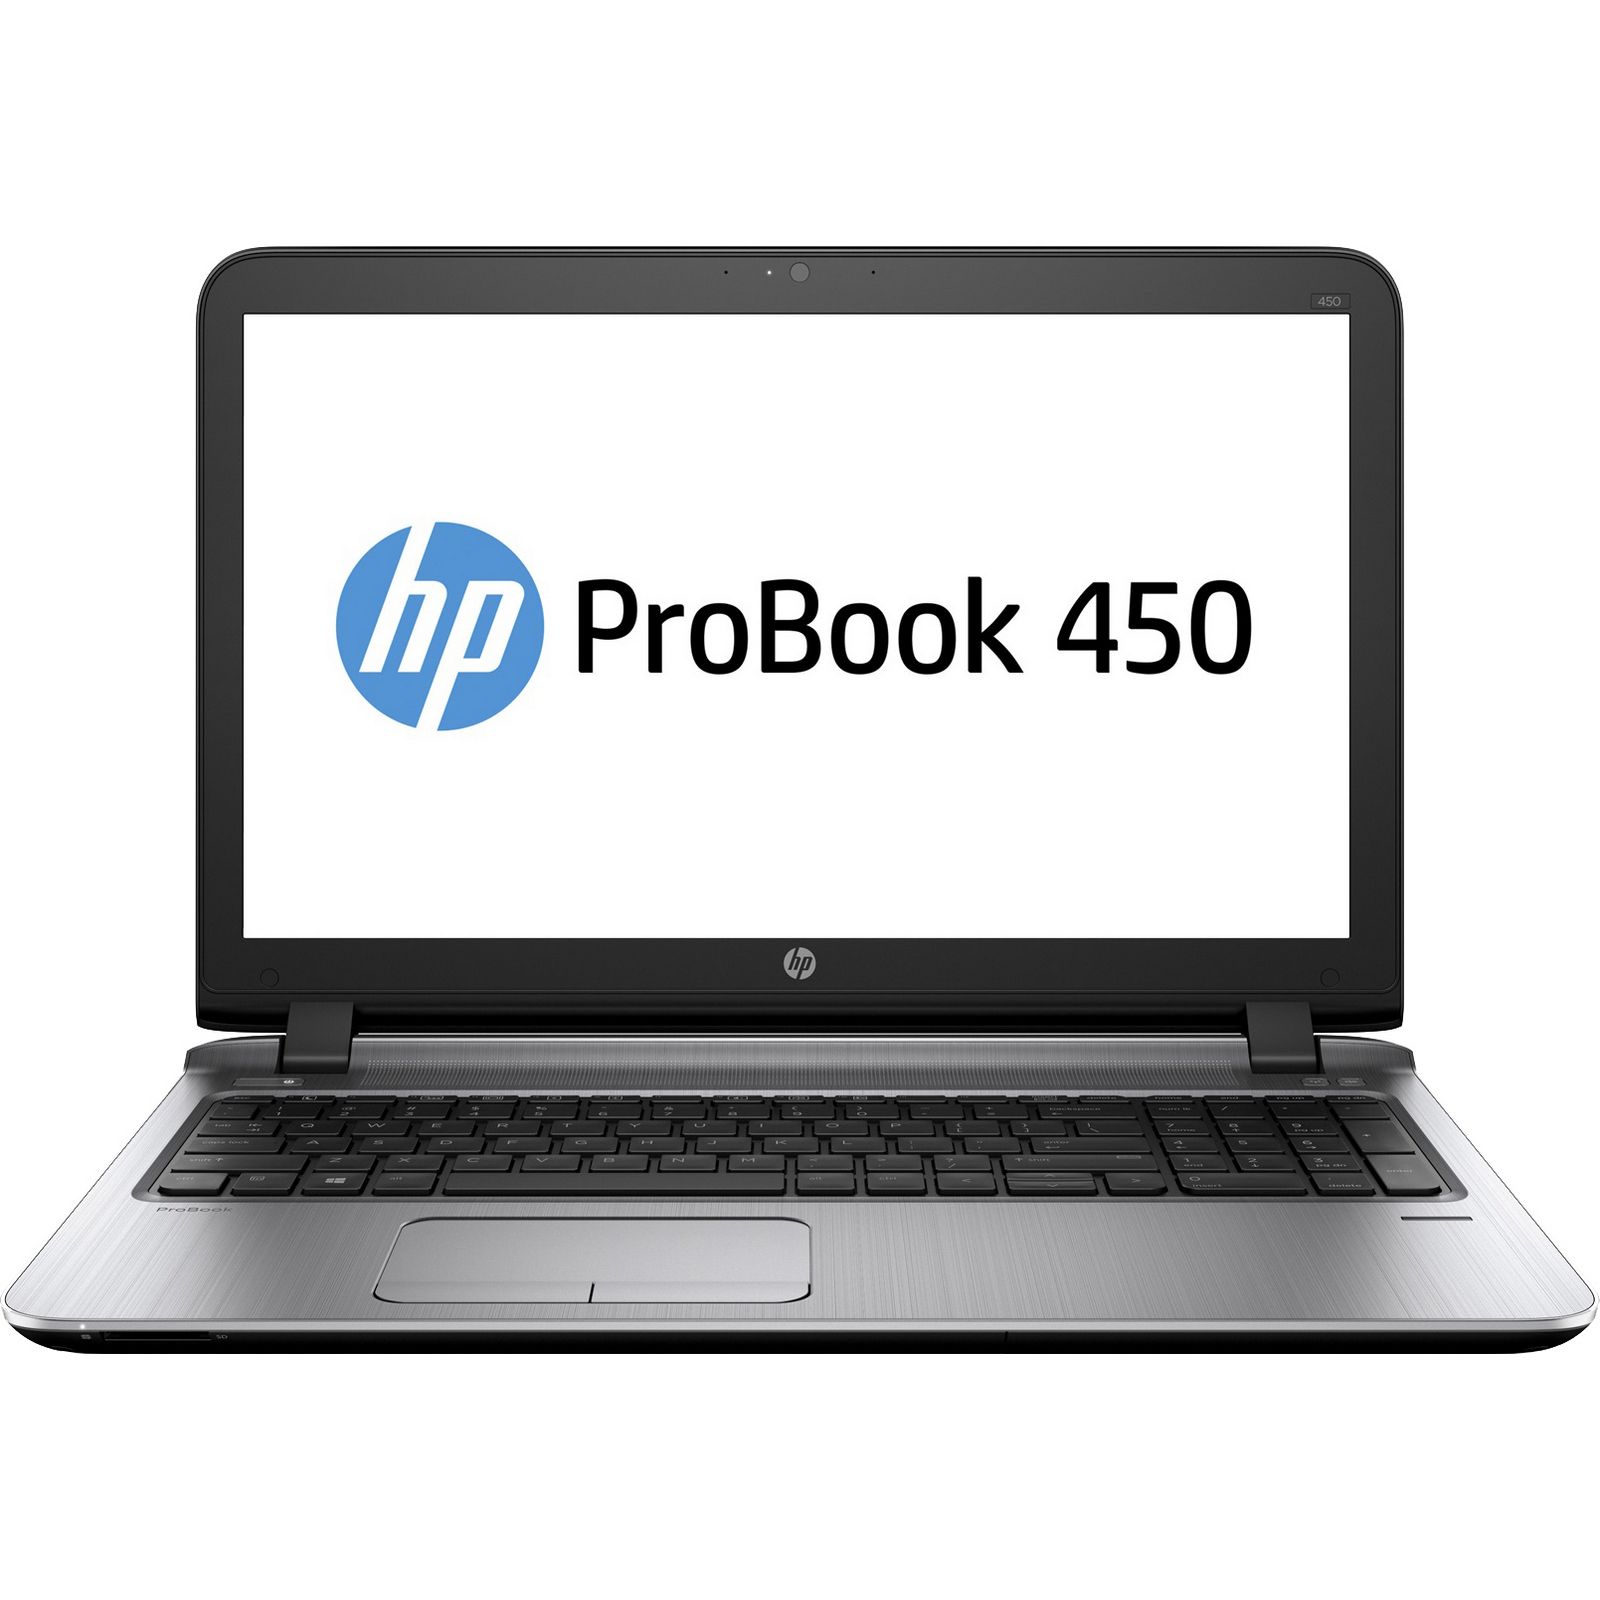 Laptop HP ProBook 450 G3, Intel Core i5-6200U, 8GB DDR3, HDD 1TB, AMD Radeon R7 M340 2GB, Free DOS